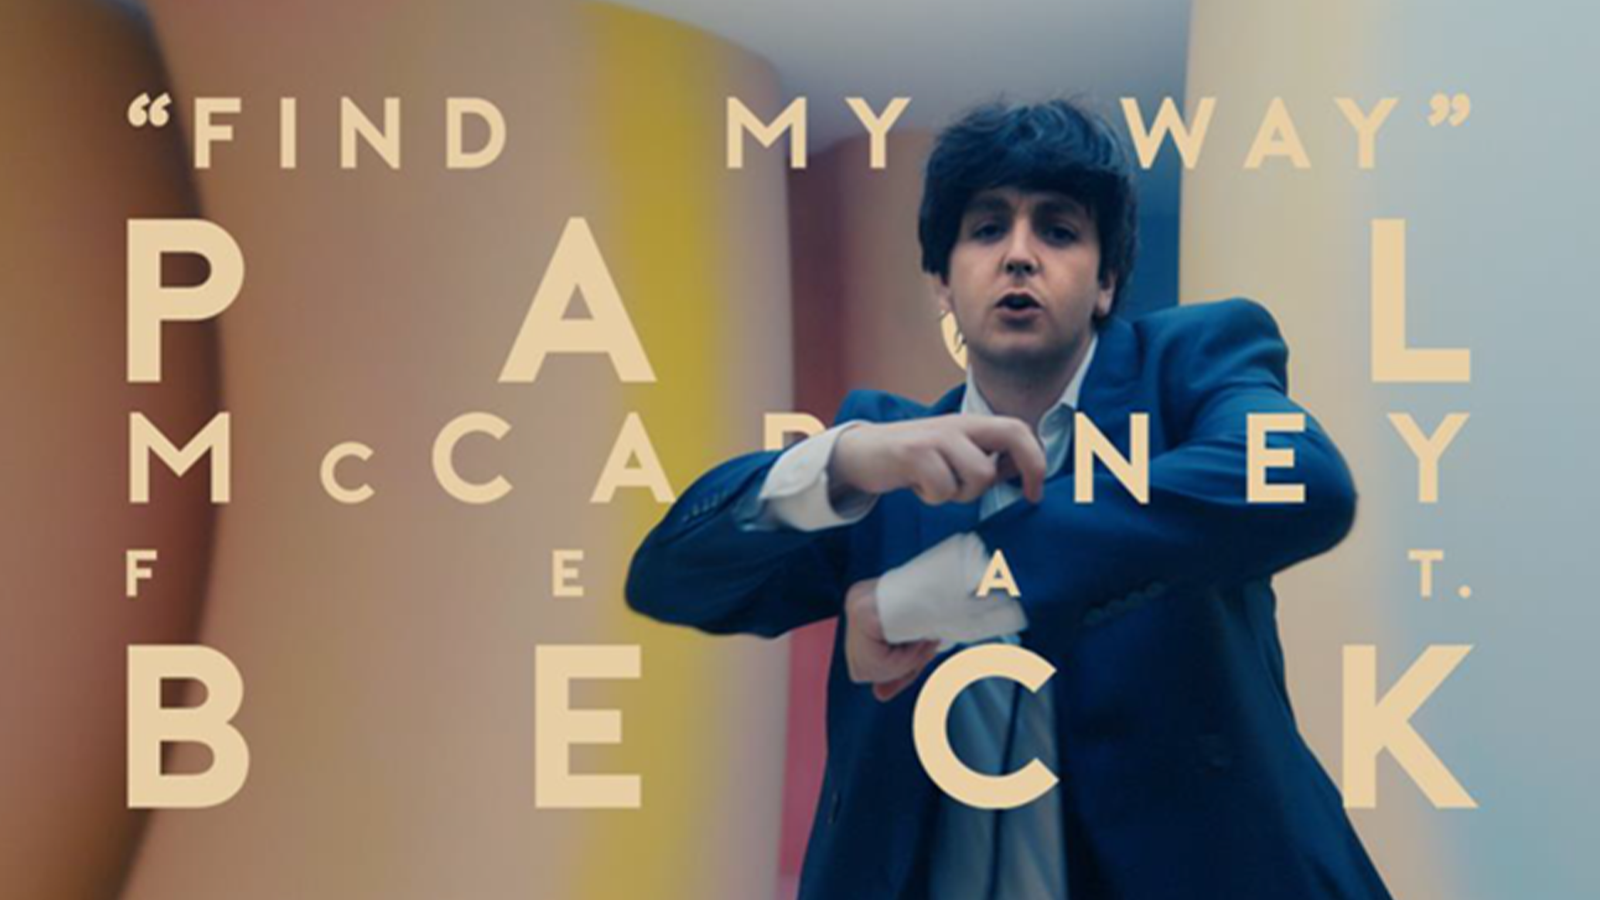 Sir Paul McCartney: Digitally ‘de-aged’ Beatles star has years knocked off appearance in new music video